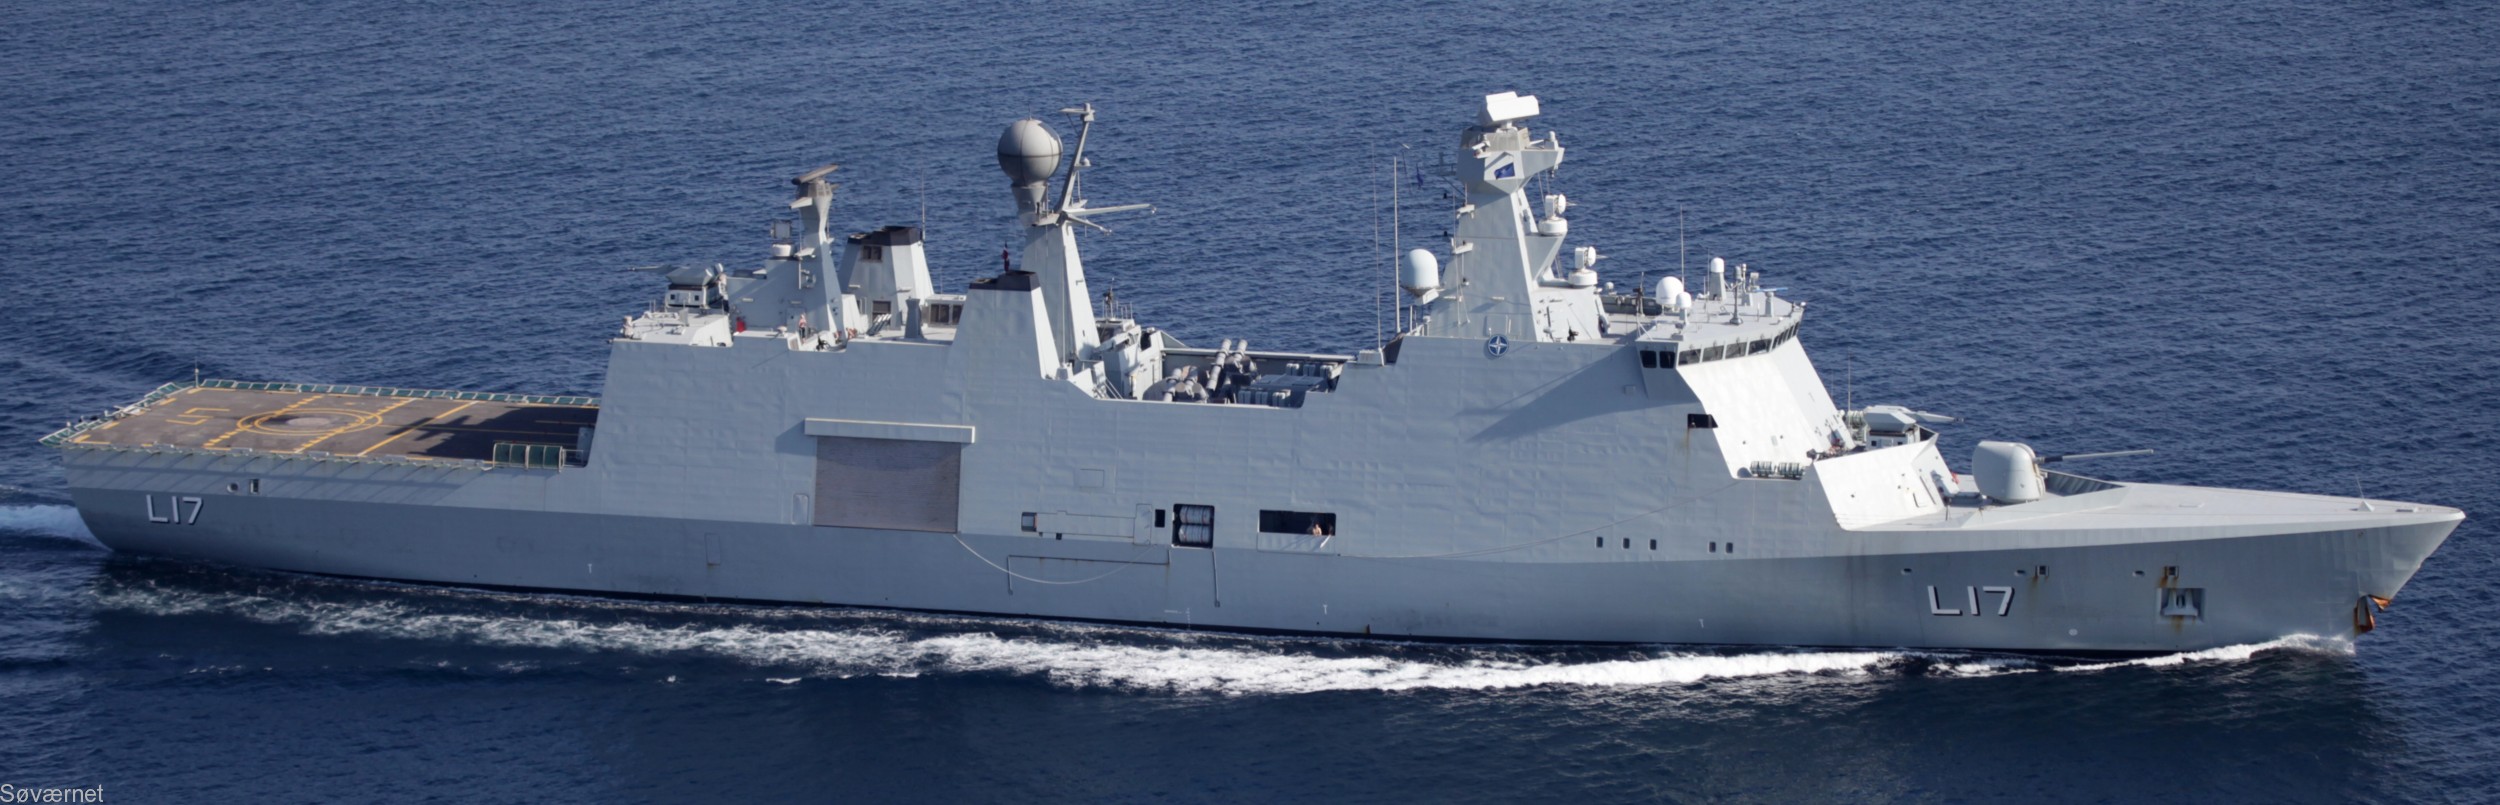 f-342 hdms esbern snare l-17 frigate command support ship royal danish navy 52